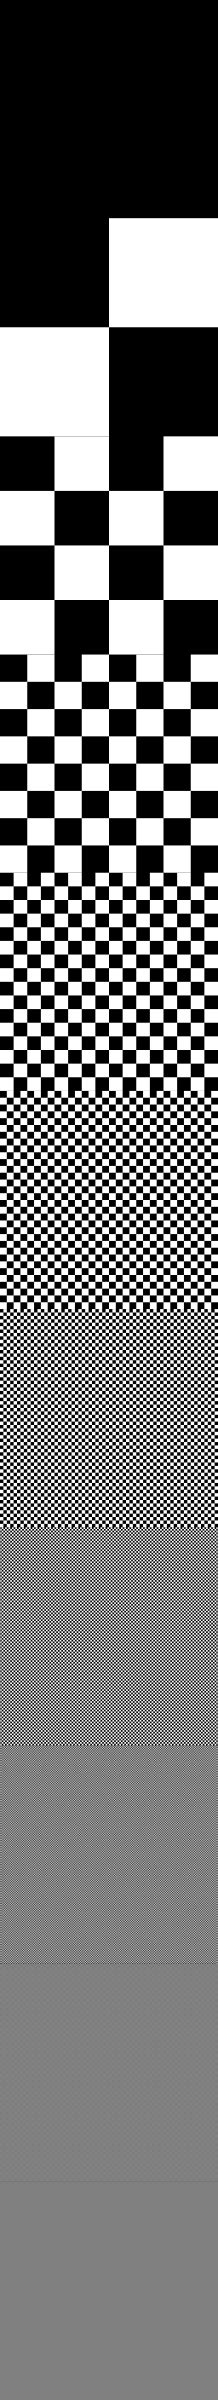 Clipart - halftone squares